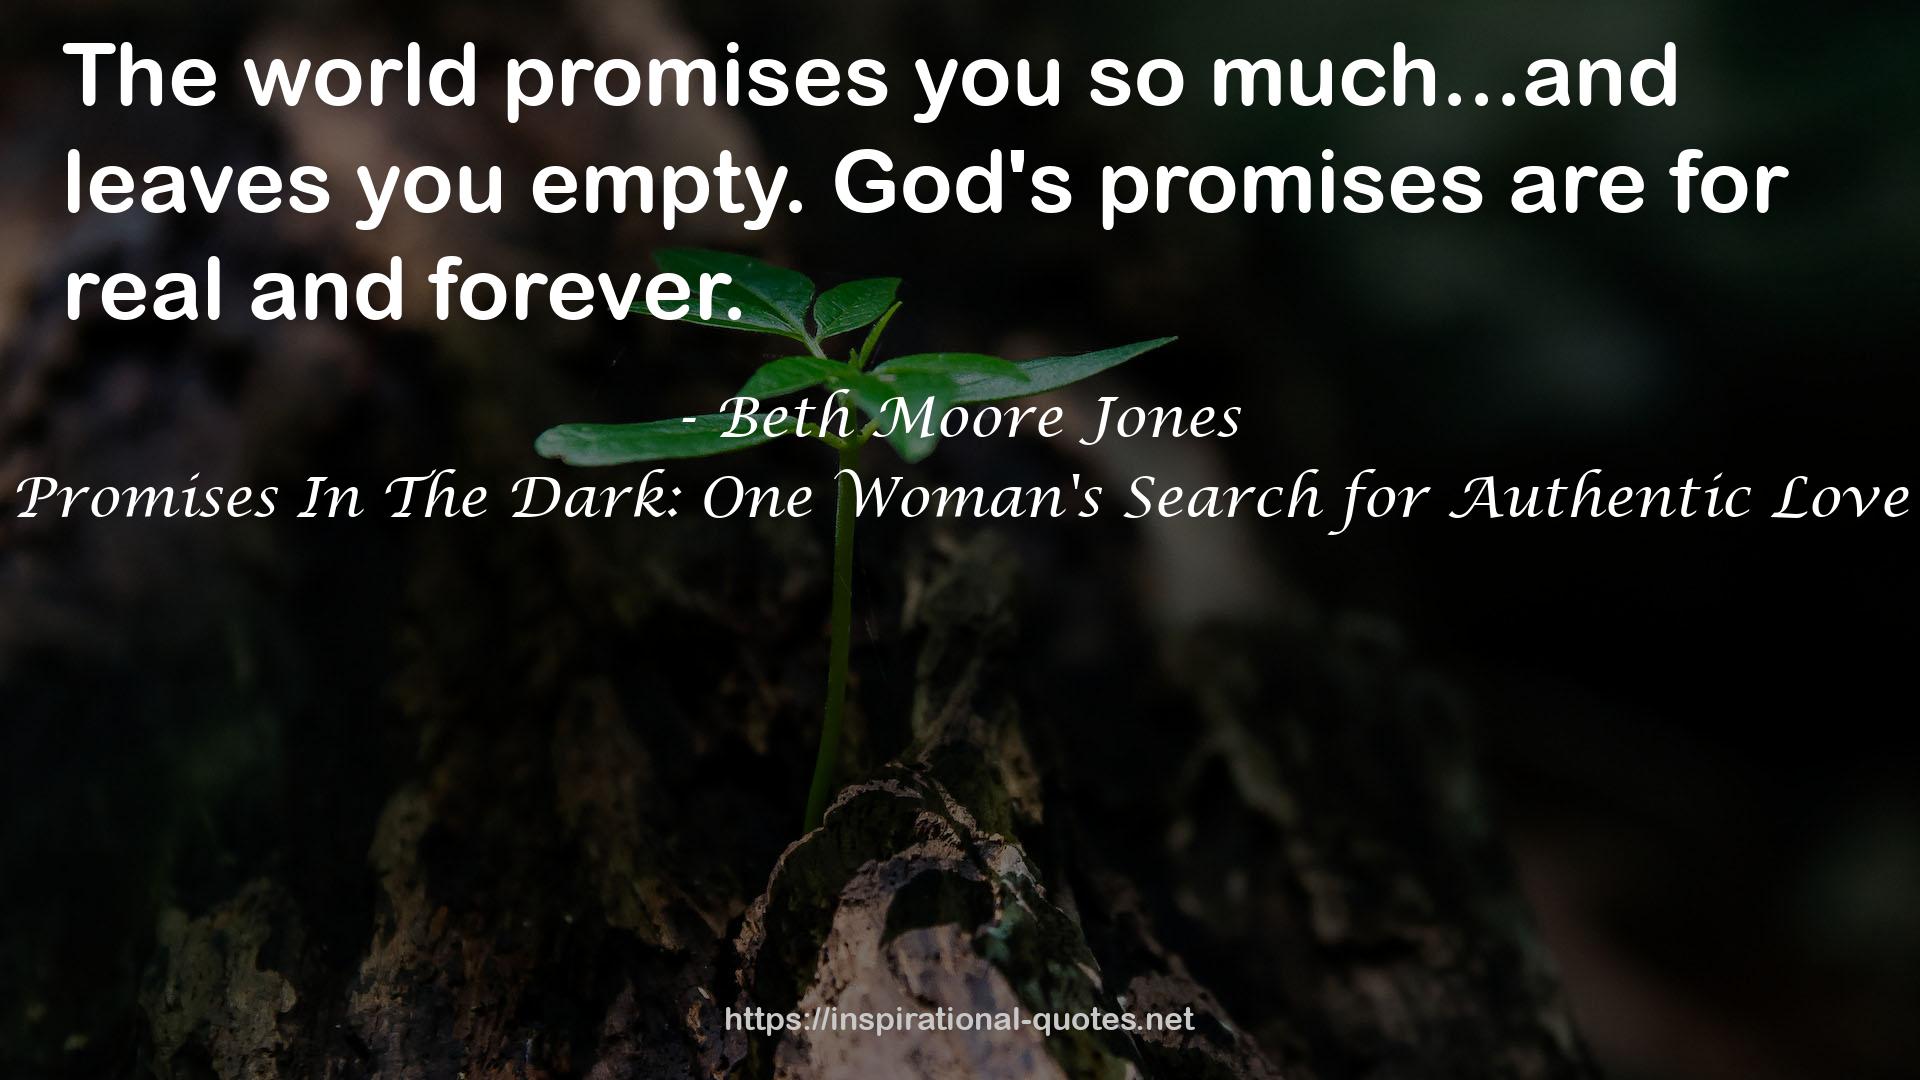 Beth Moore Jones QUOTES